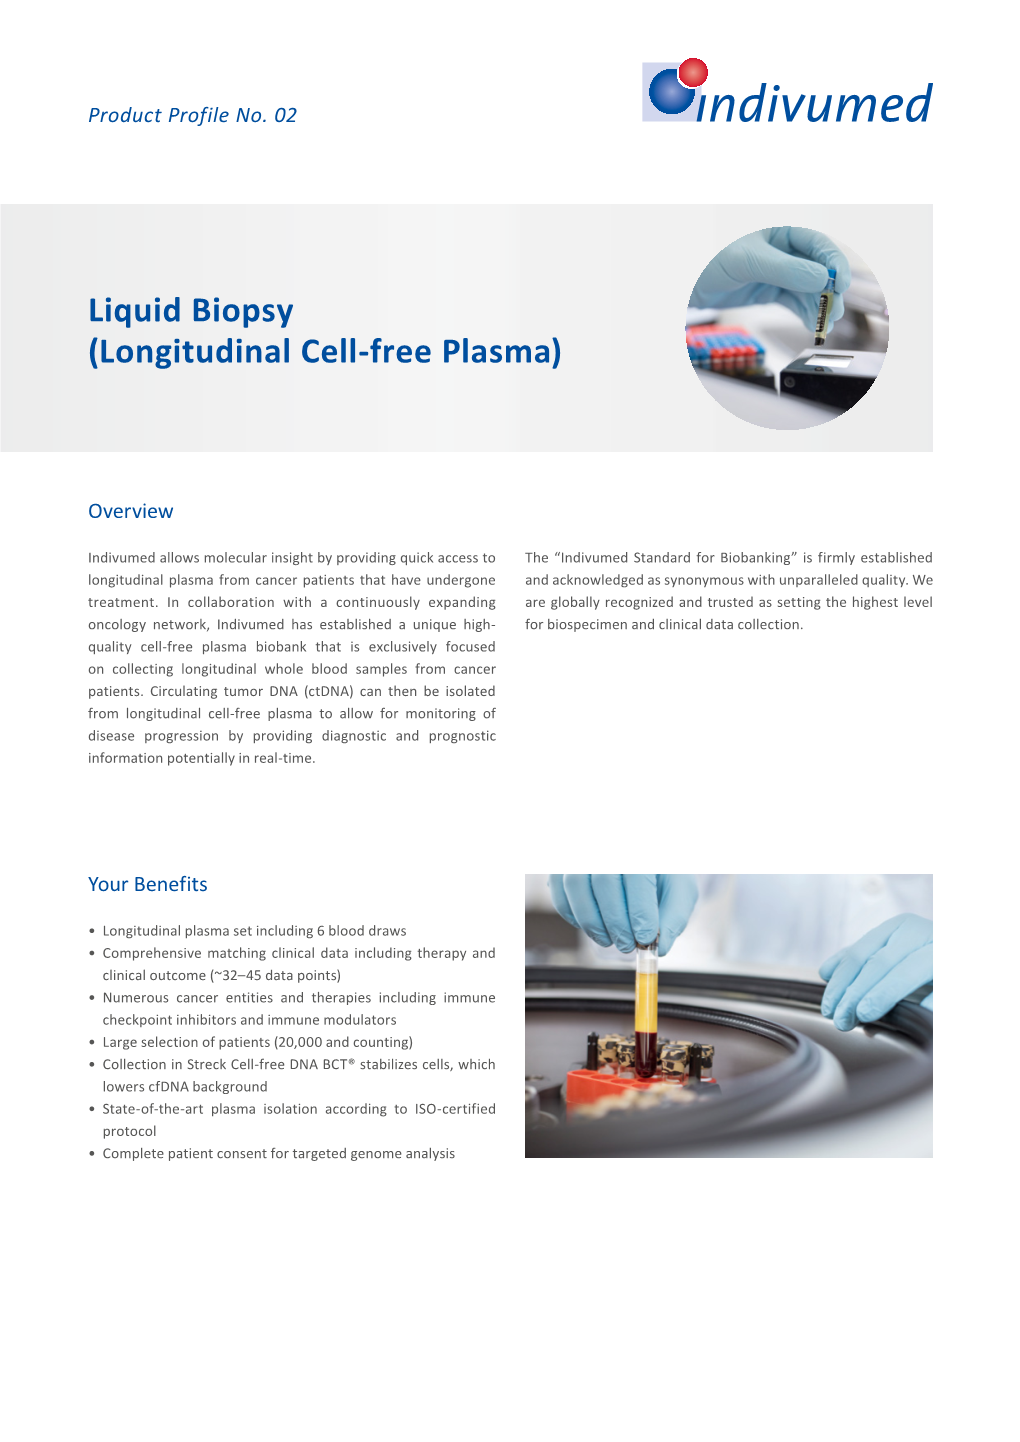 Liquid Biopsy (Longitudinal Cell-Free Plasma)